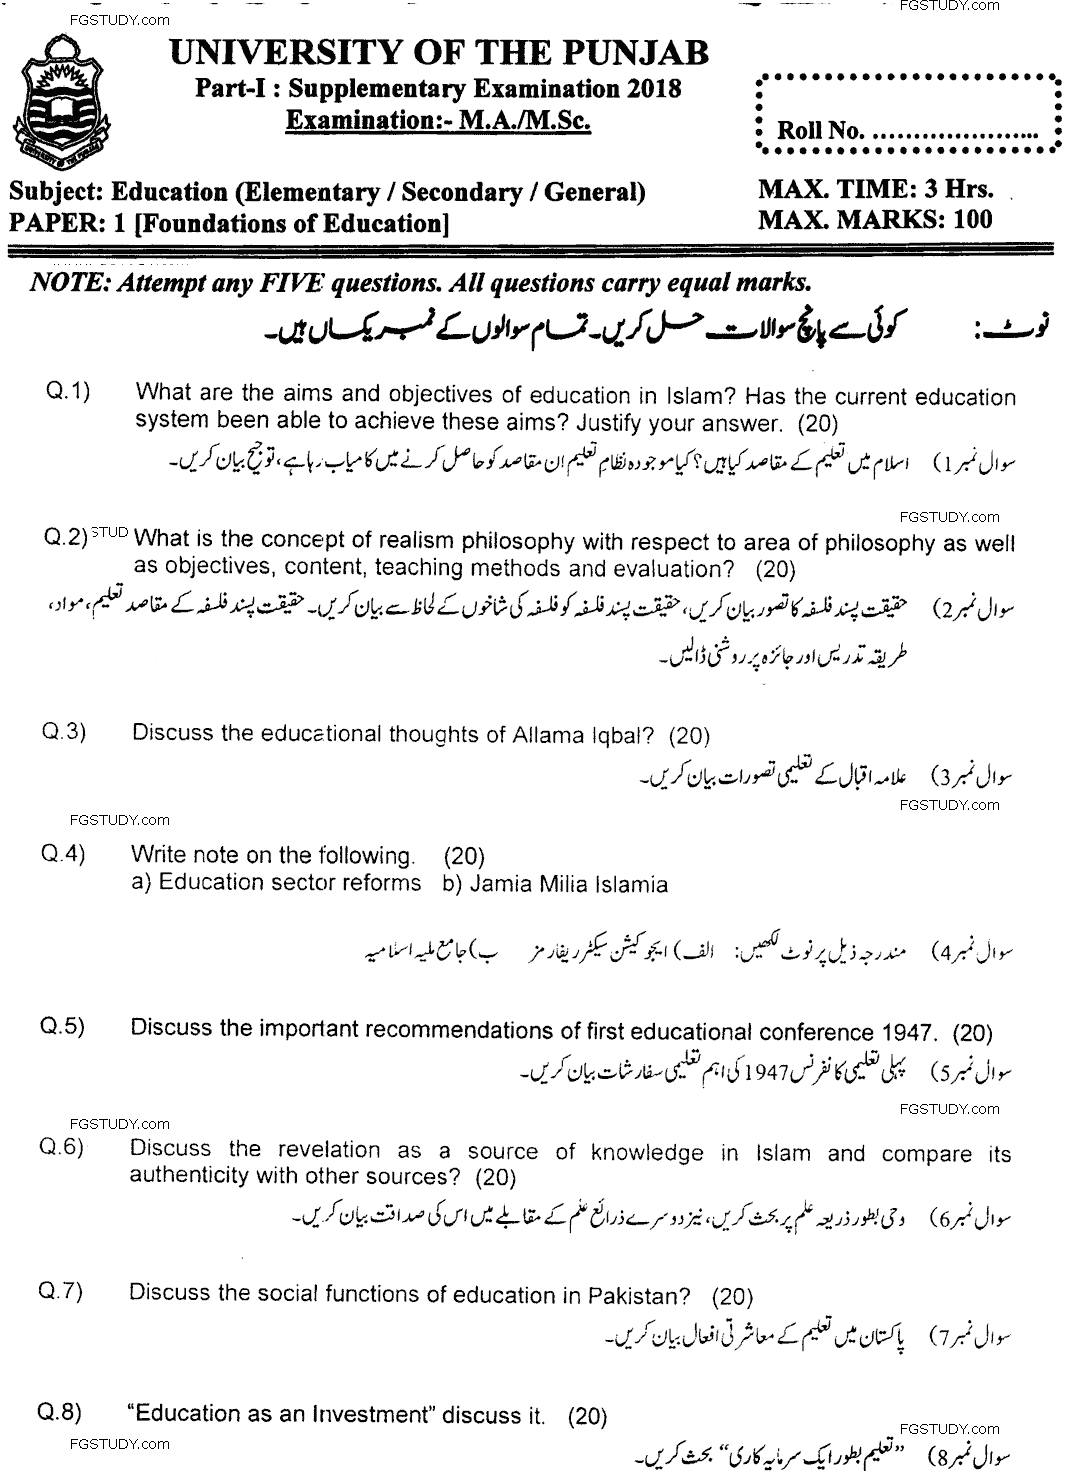 MA Part 1 Education Elementary Foundations Of Education Past Paper 2018 Punjab University